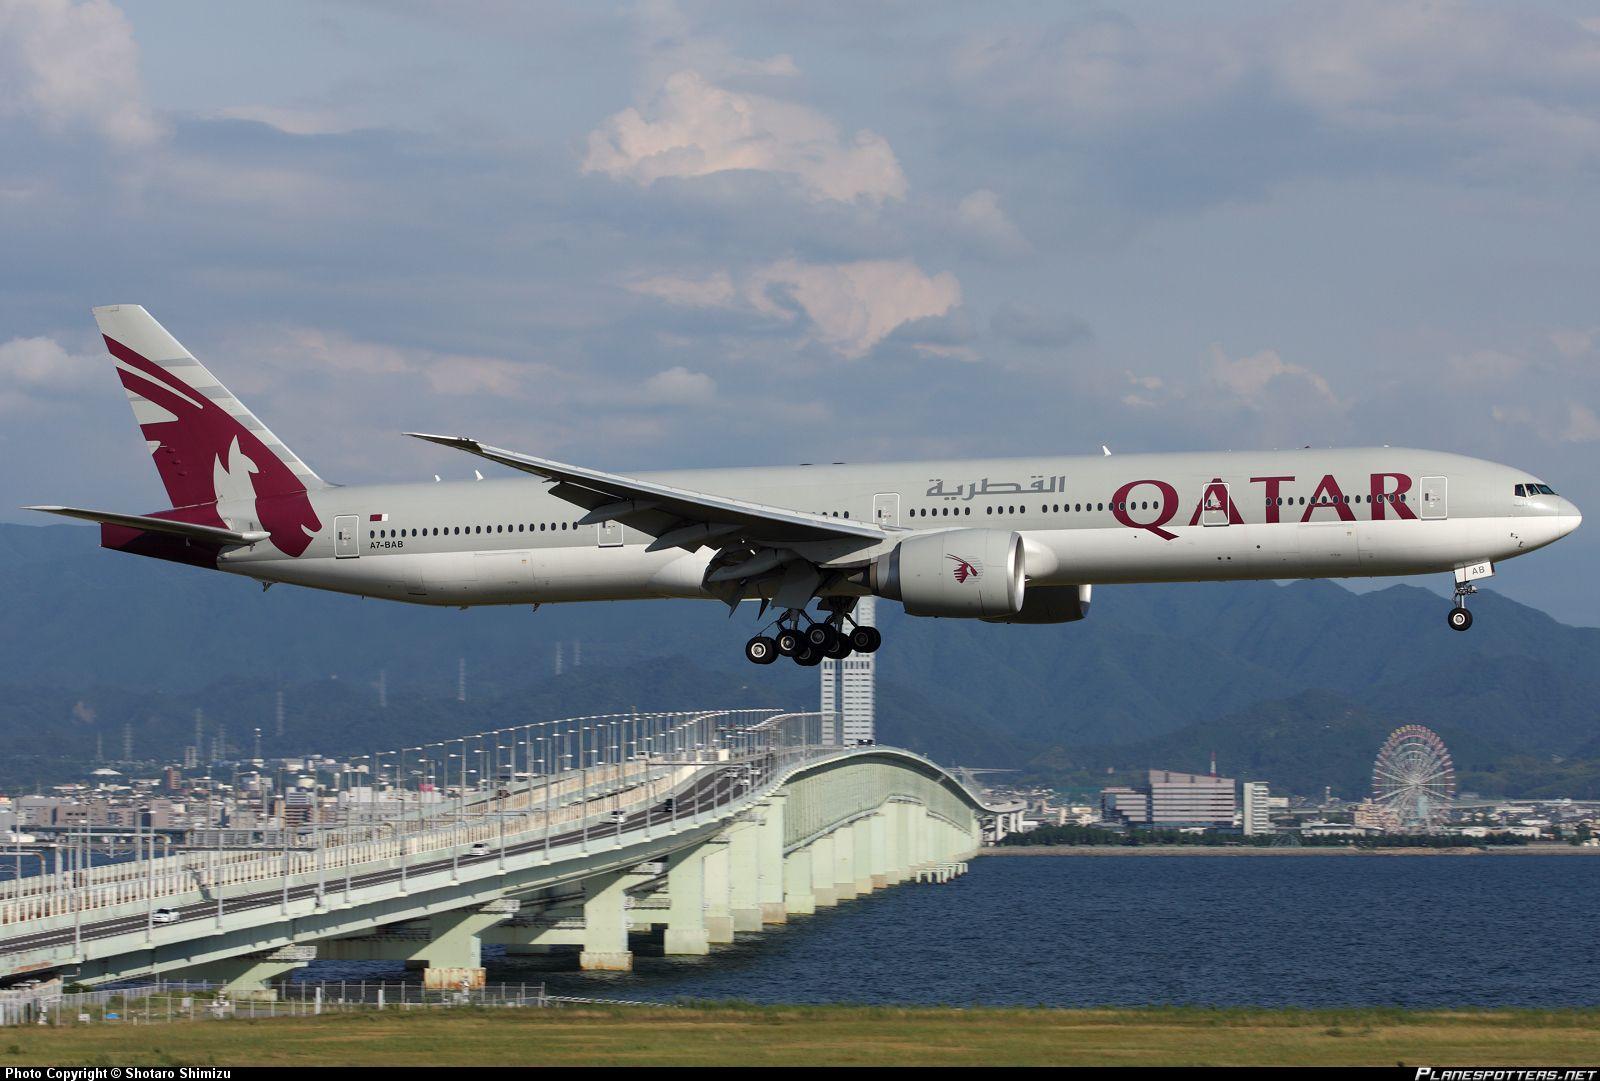 Qatar Airways Boeing Top HD Wallpaper very beautiful and much